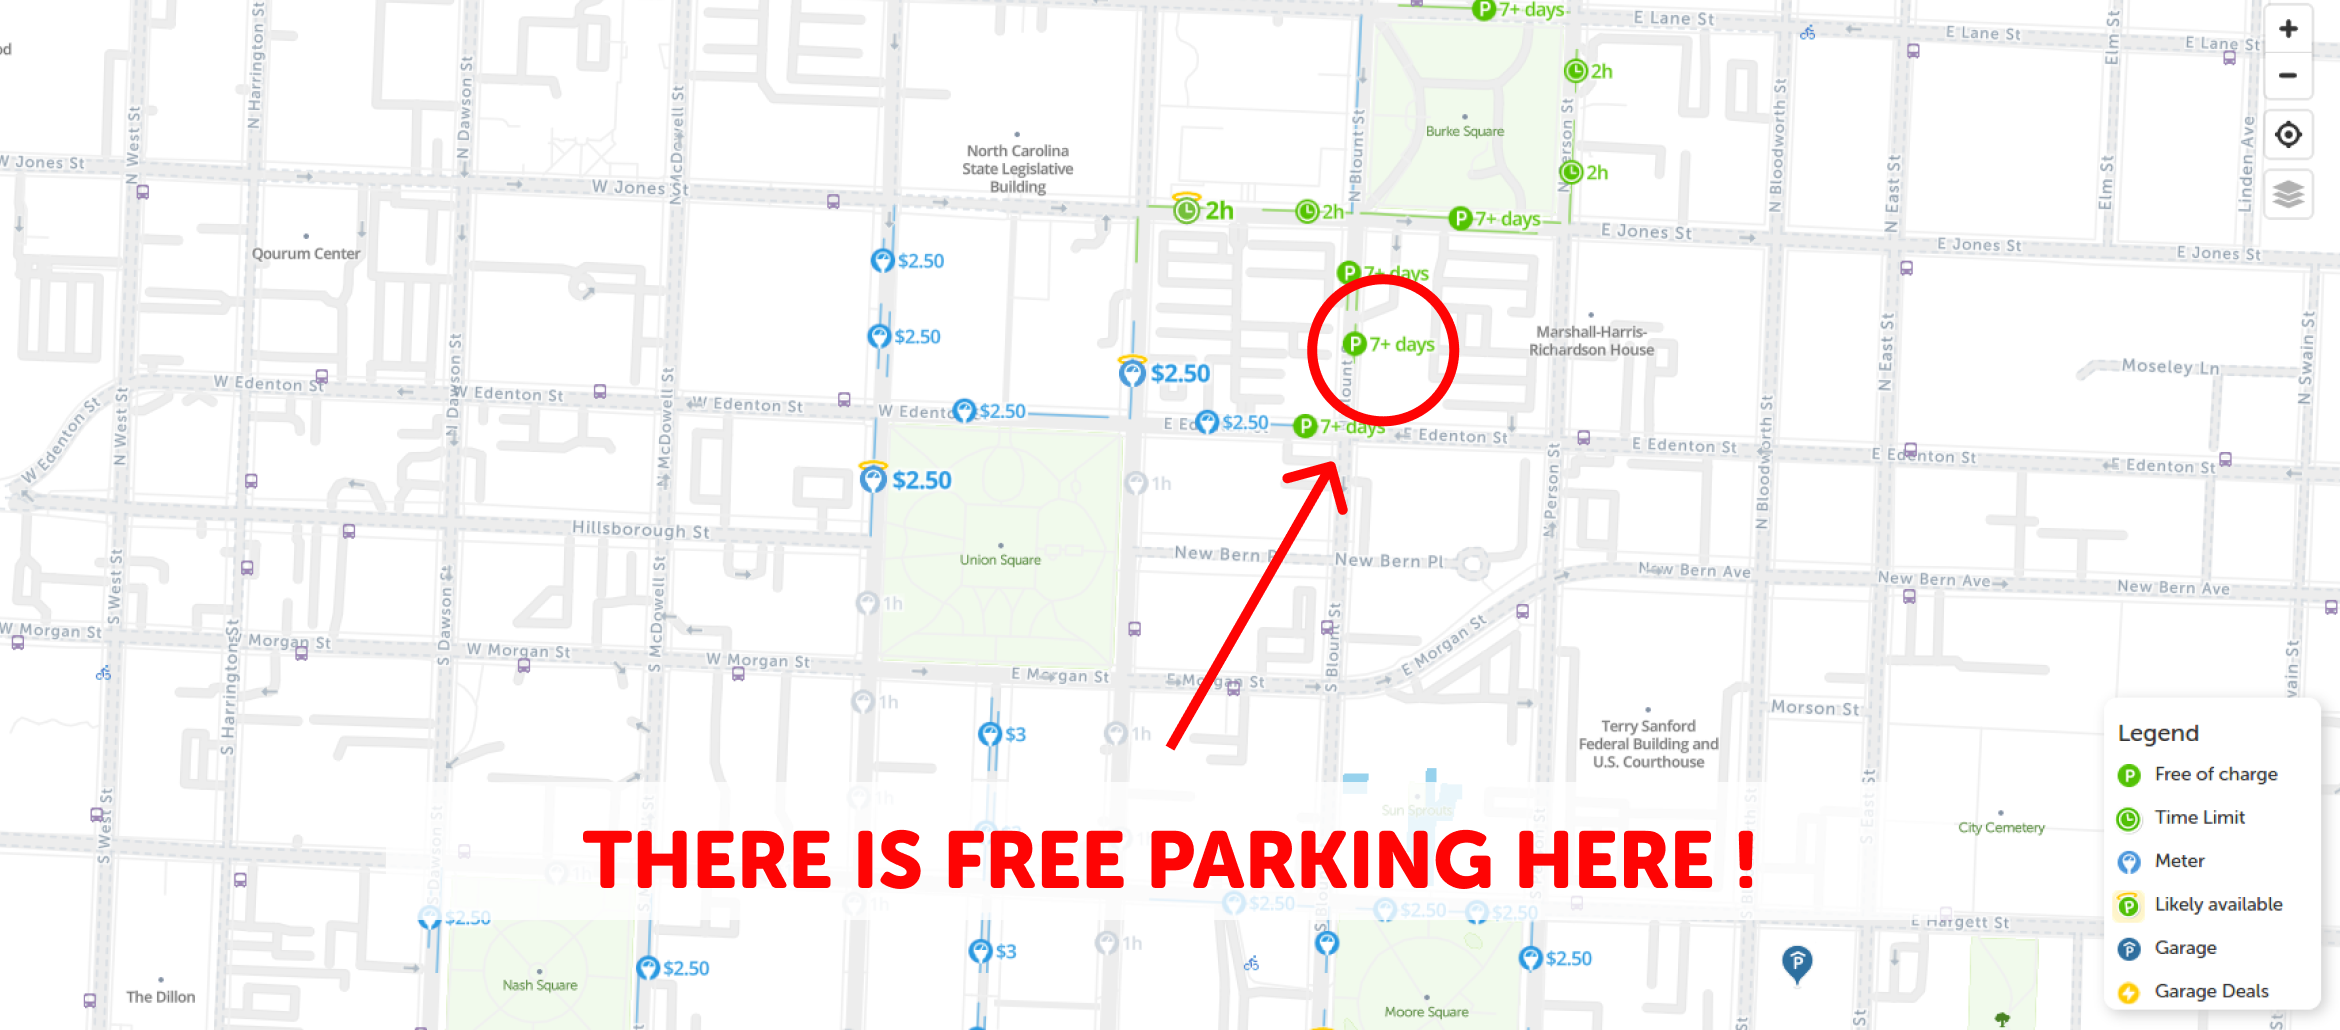 map of free parking in Raleigh - SpotAngels